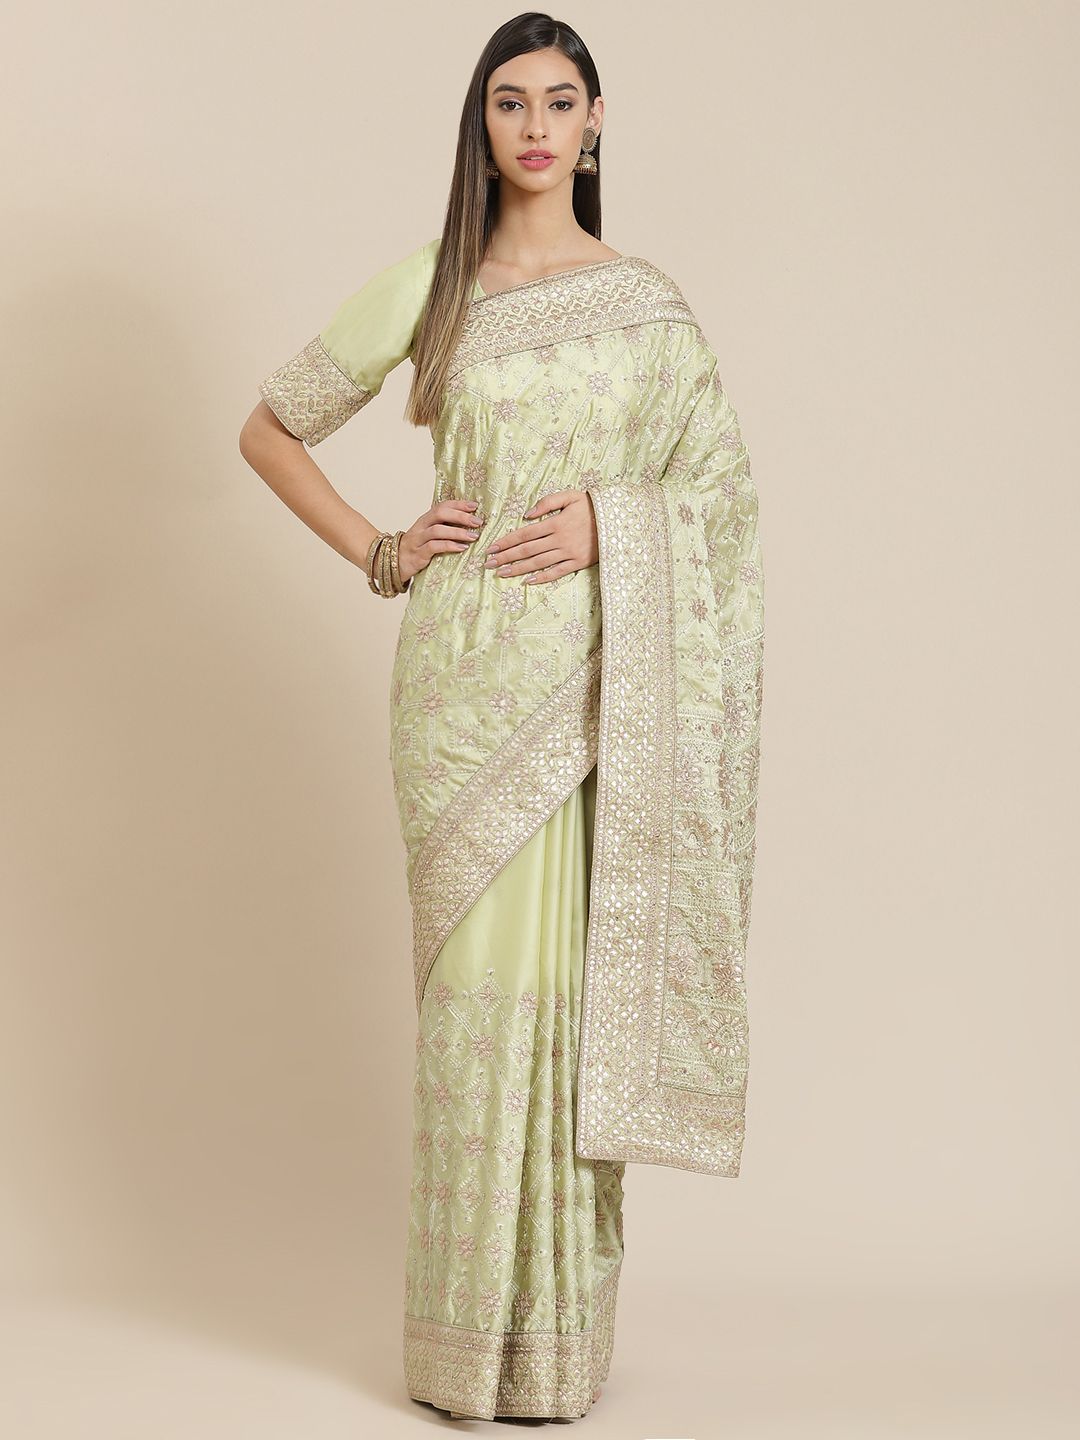 Readiprint Fashions Lime Green Ethnic Motifs Embroidered Gotta Patti Georgette Saree Price in India